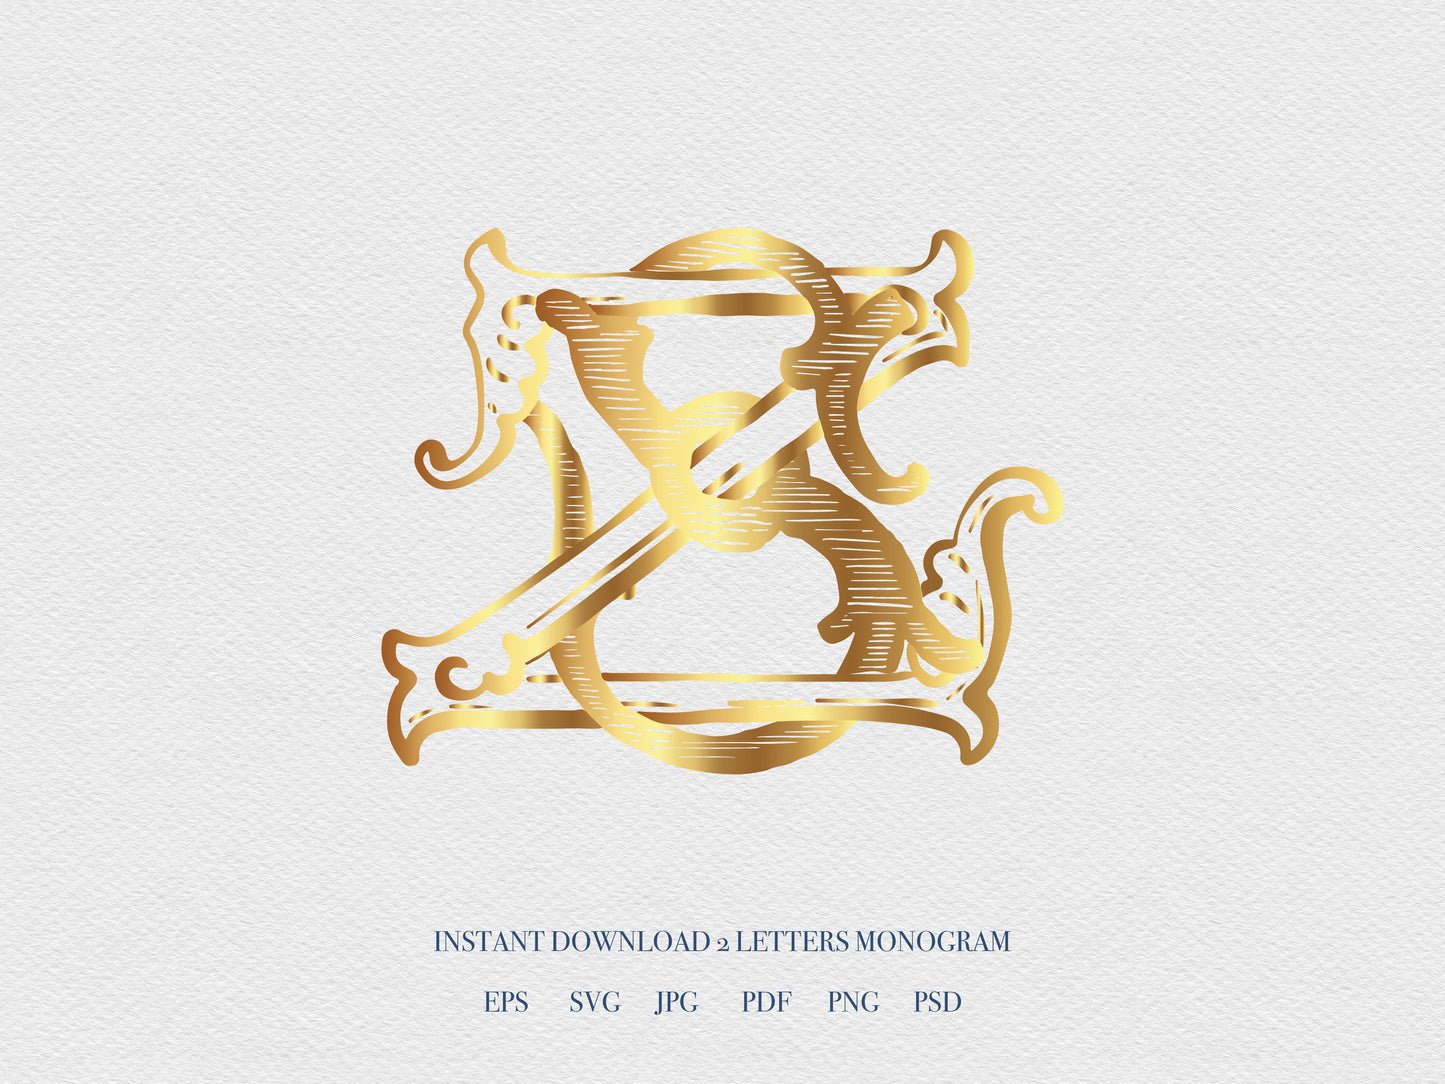 2 Letter Monogram with Letters SZ ZS | Digital Download - Wedding Monogram SVG, Personal Logo, Wedding Logo for Wedding Invitations The Wedding Crest Lab